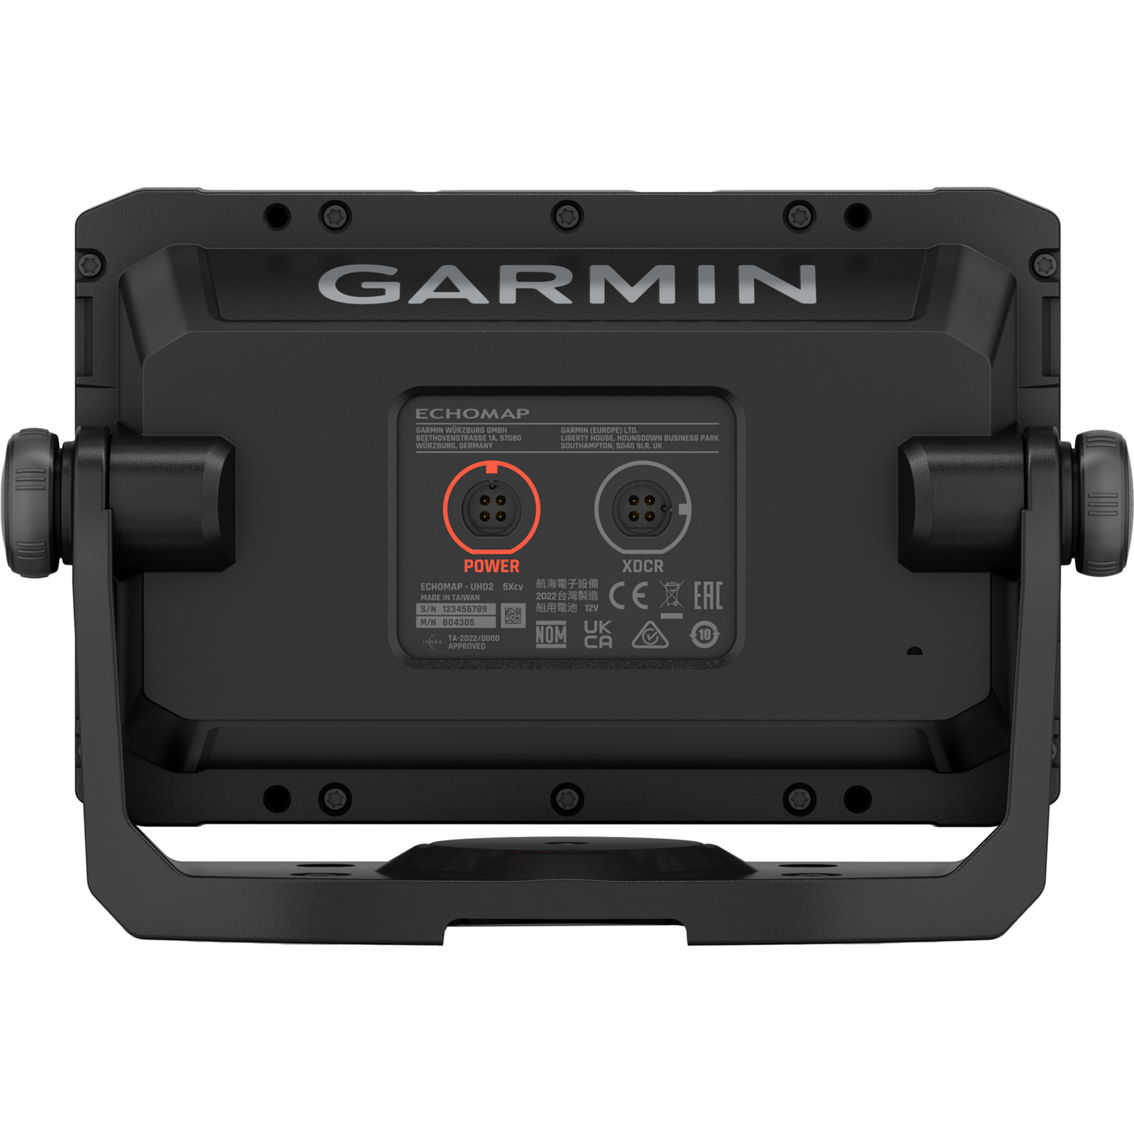 Garmin Echomap UHD2 54cv Navionics+ U.S. Coastal Content without Transducer - Image 4 of 7